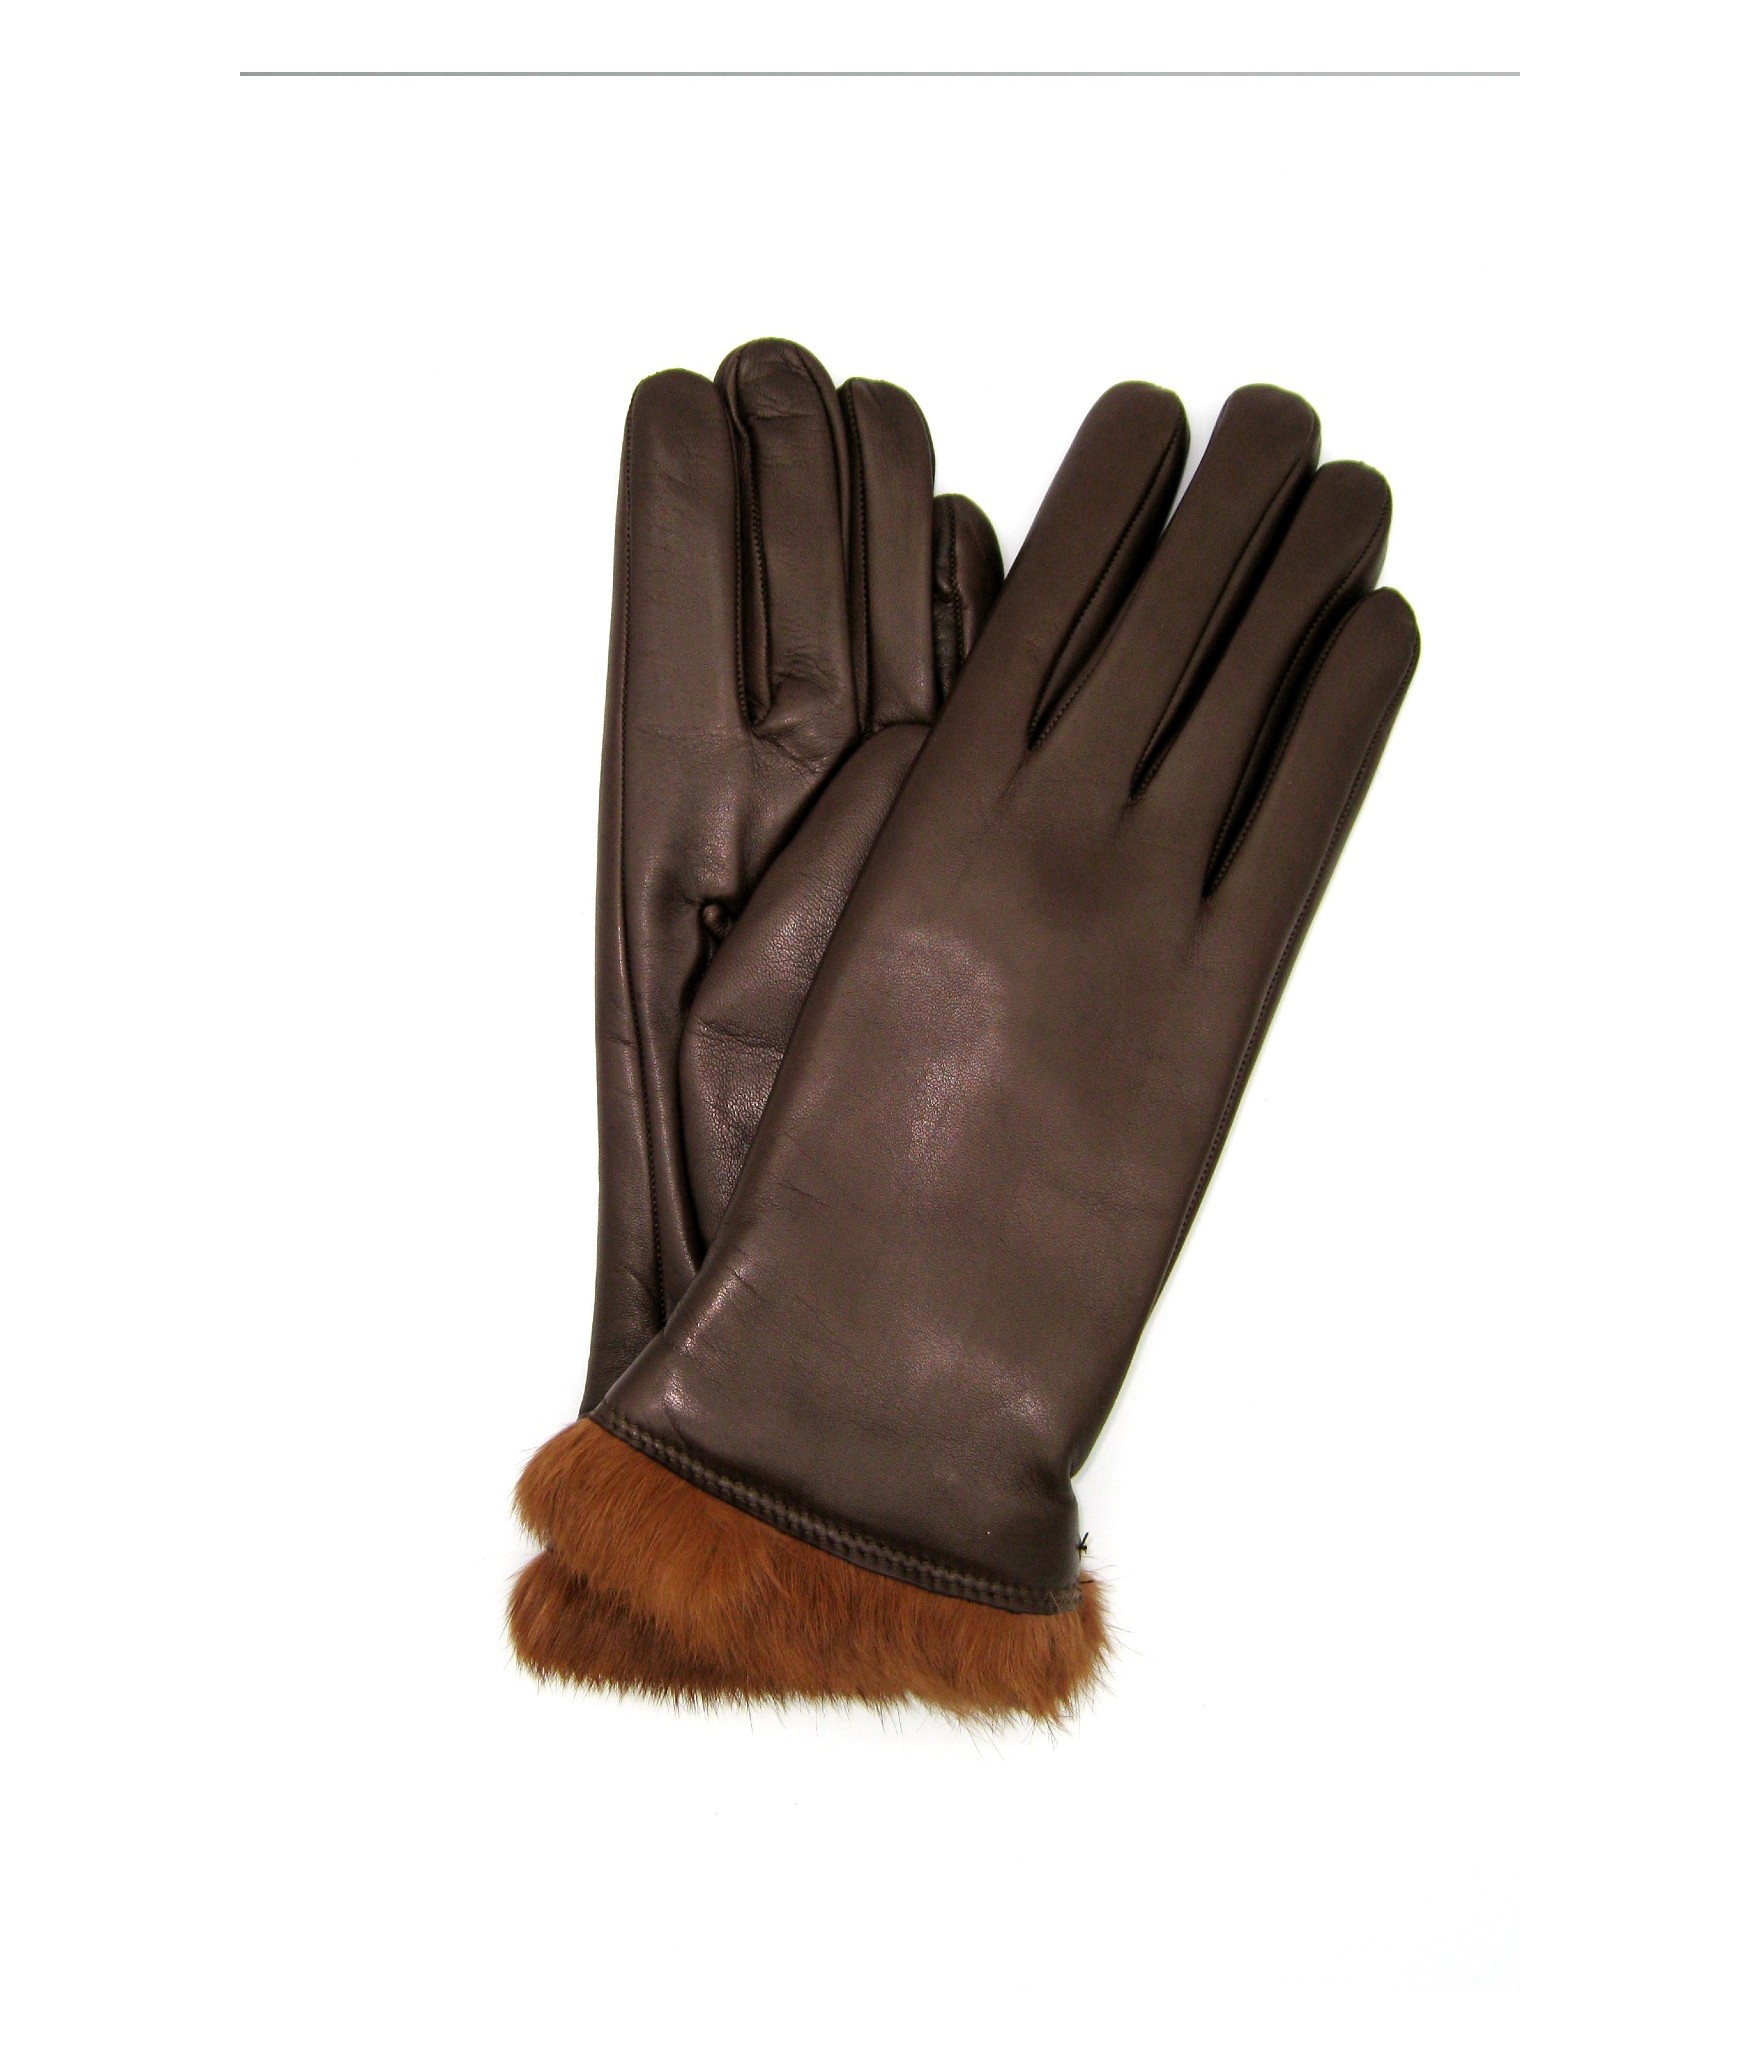 Woman Artik Nappa leather gloves 4bt Rabbir fur lined Mink